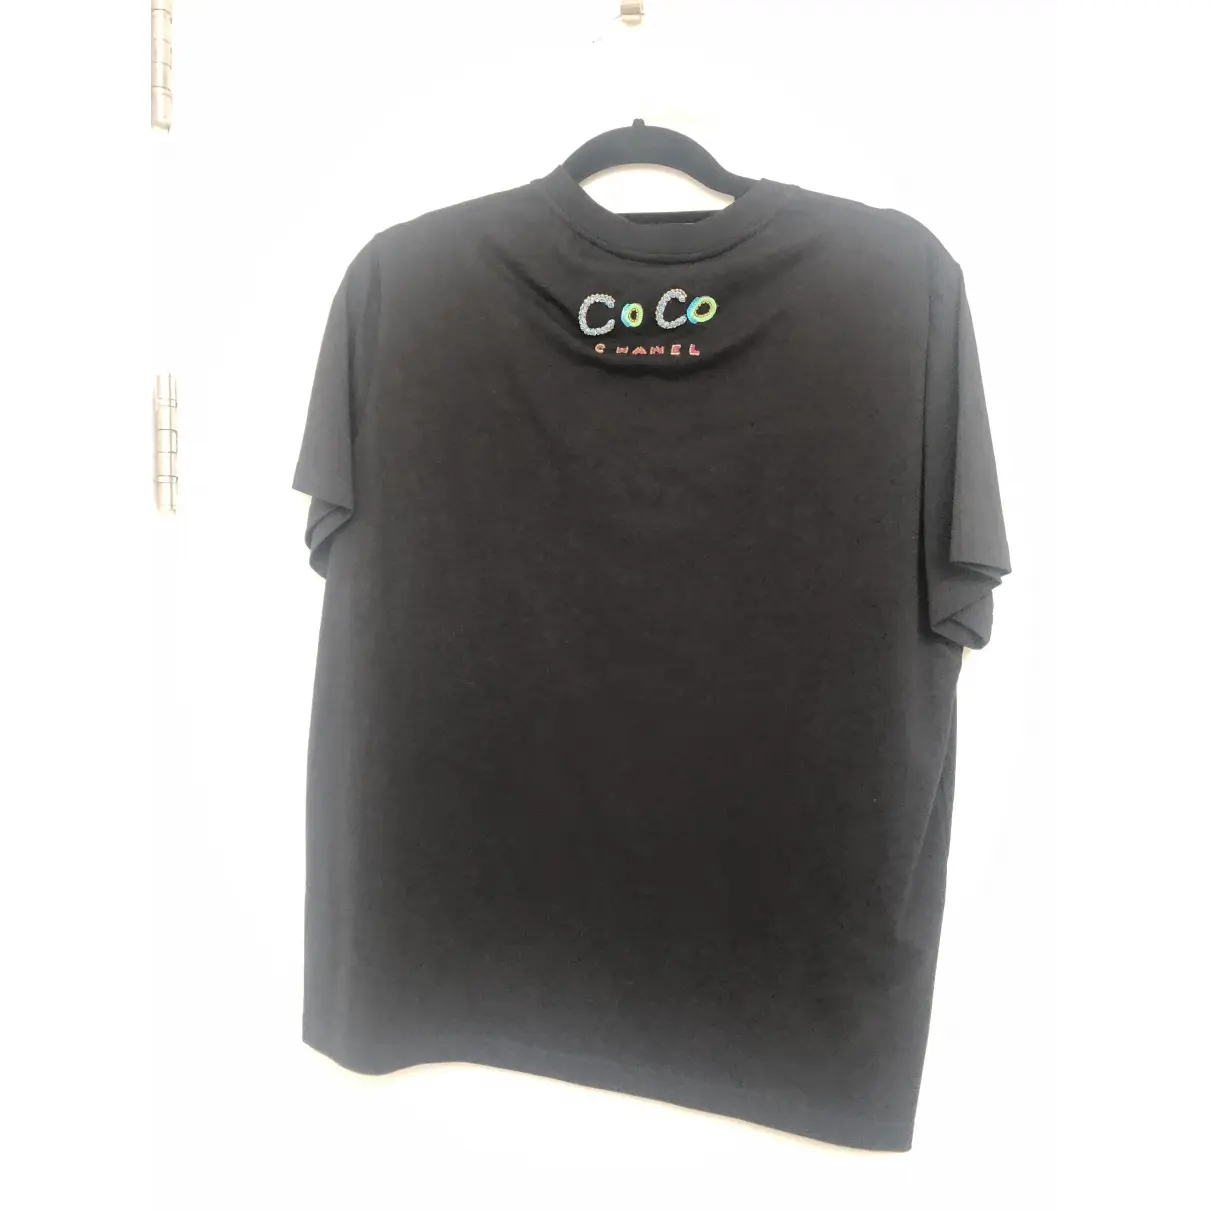 Chanel x Pharrell Williams Black Cotton T-shirt for sale